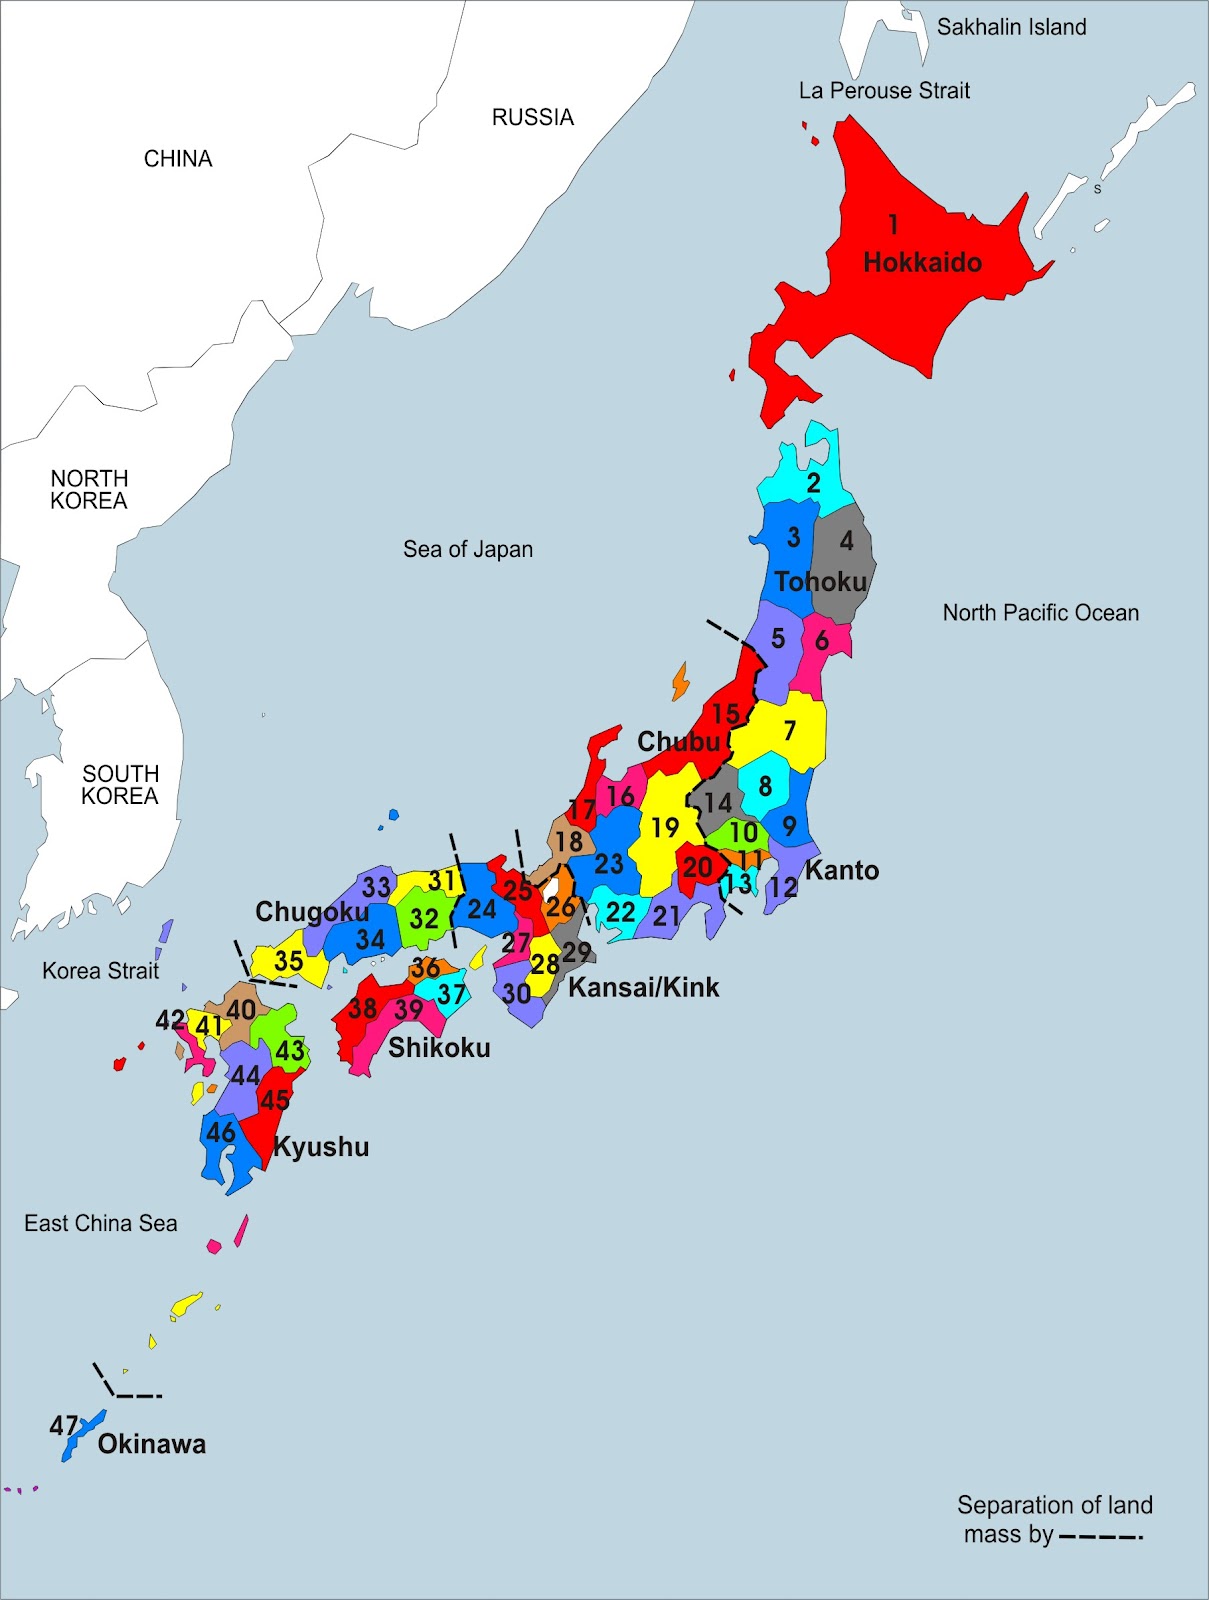 http://2.bp.blogspot.com/-I8XhFHjjqKo/T8T7znbw3NI/AAAAAAAAPd0/eL5DkEfCEUo/s1600/japan-map.jpg